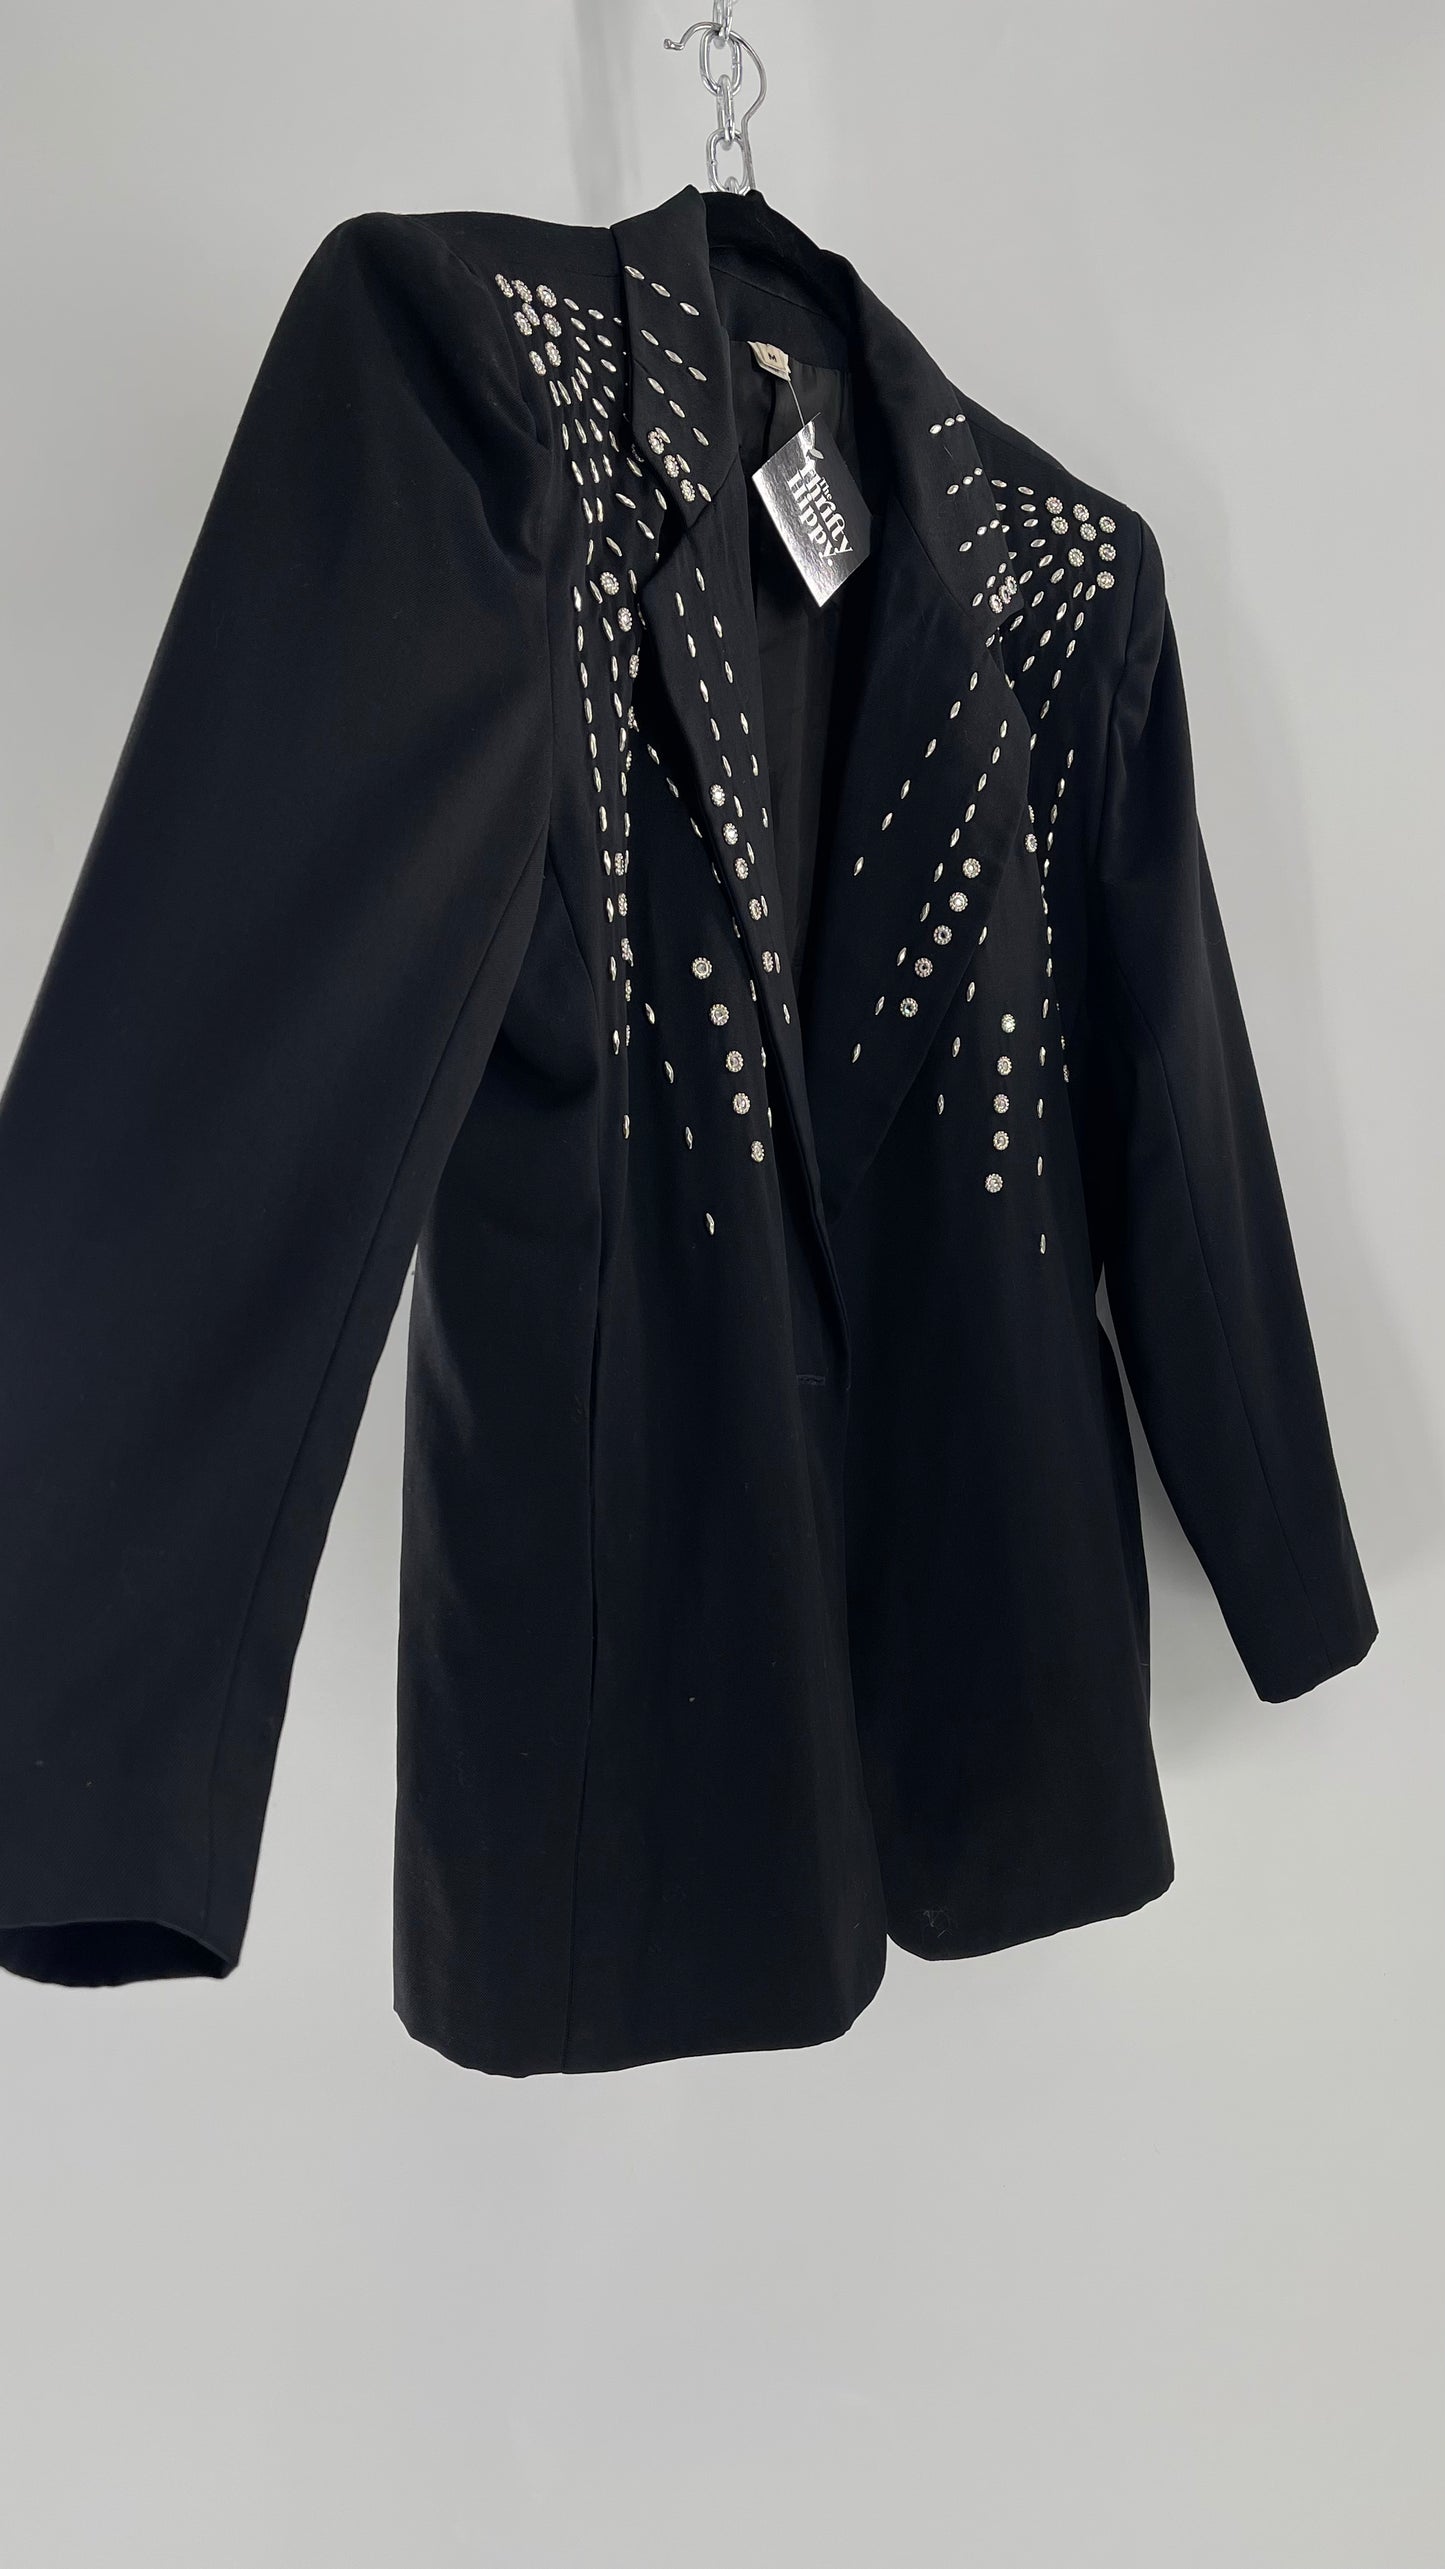 Vintage Black Blazer with Silver Metal Studs and Rhinestone Embellishments   (C)(Medium)